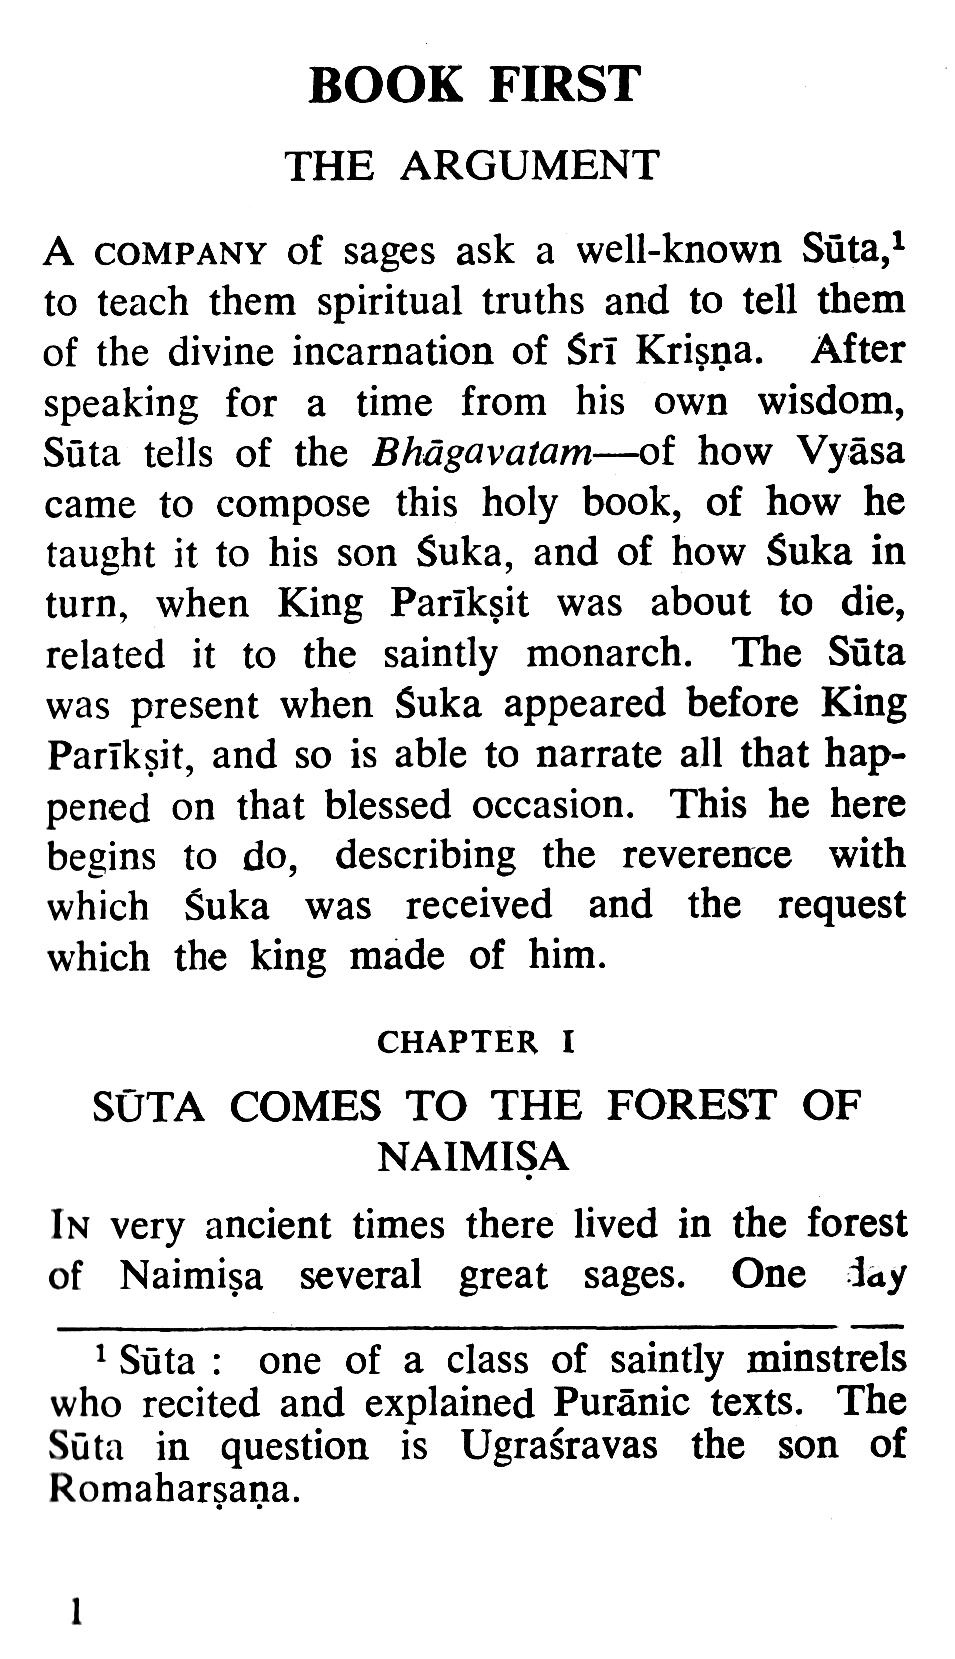 Srimad Bhagavatam - The Wisdom of God